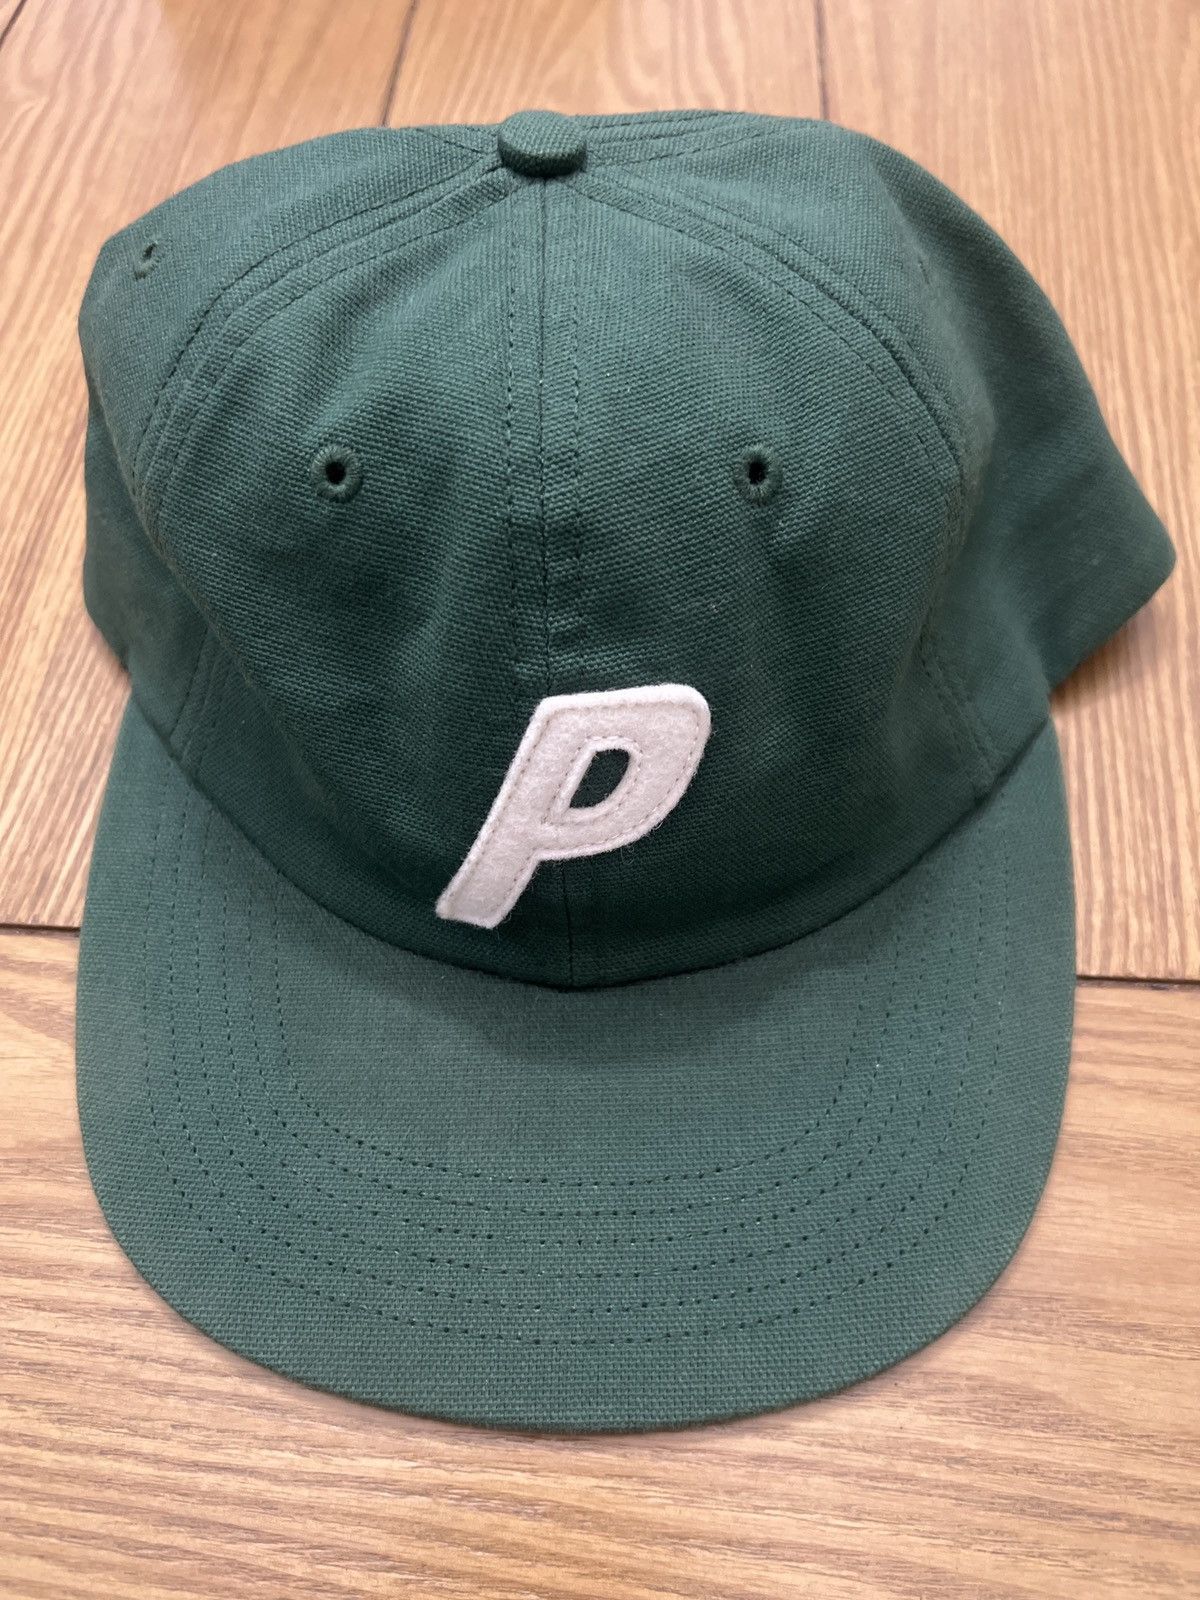 Palace Palace hat P logo | Grailed